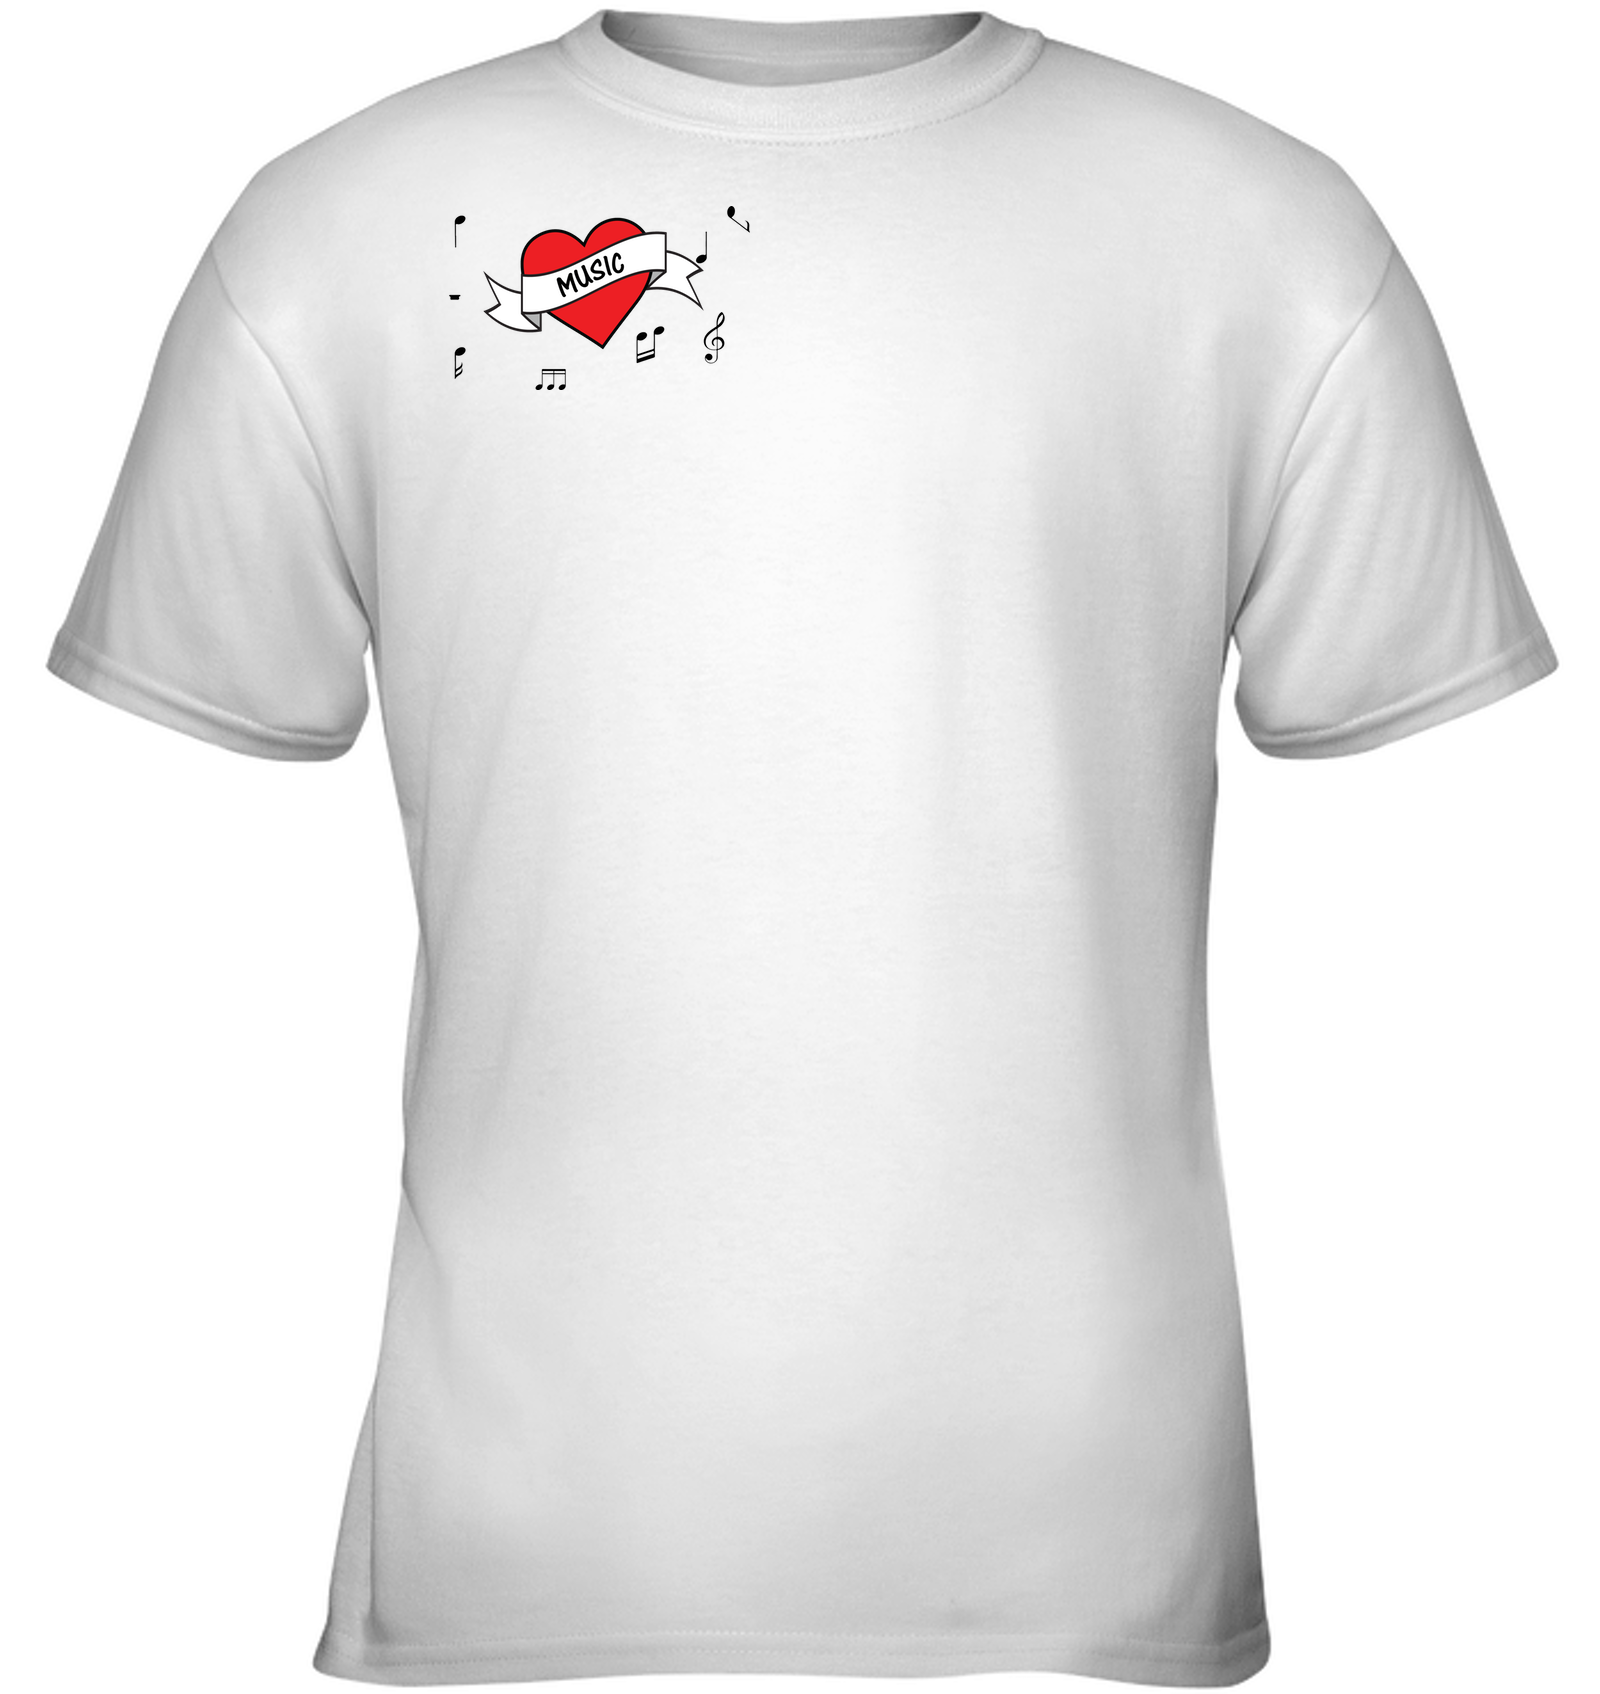 Musical Heart (Pocket Size) - Gildan Youth Short Sleeve T-Shirt